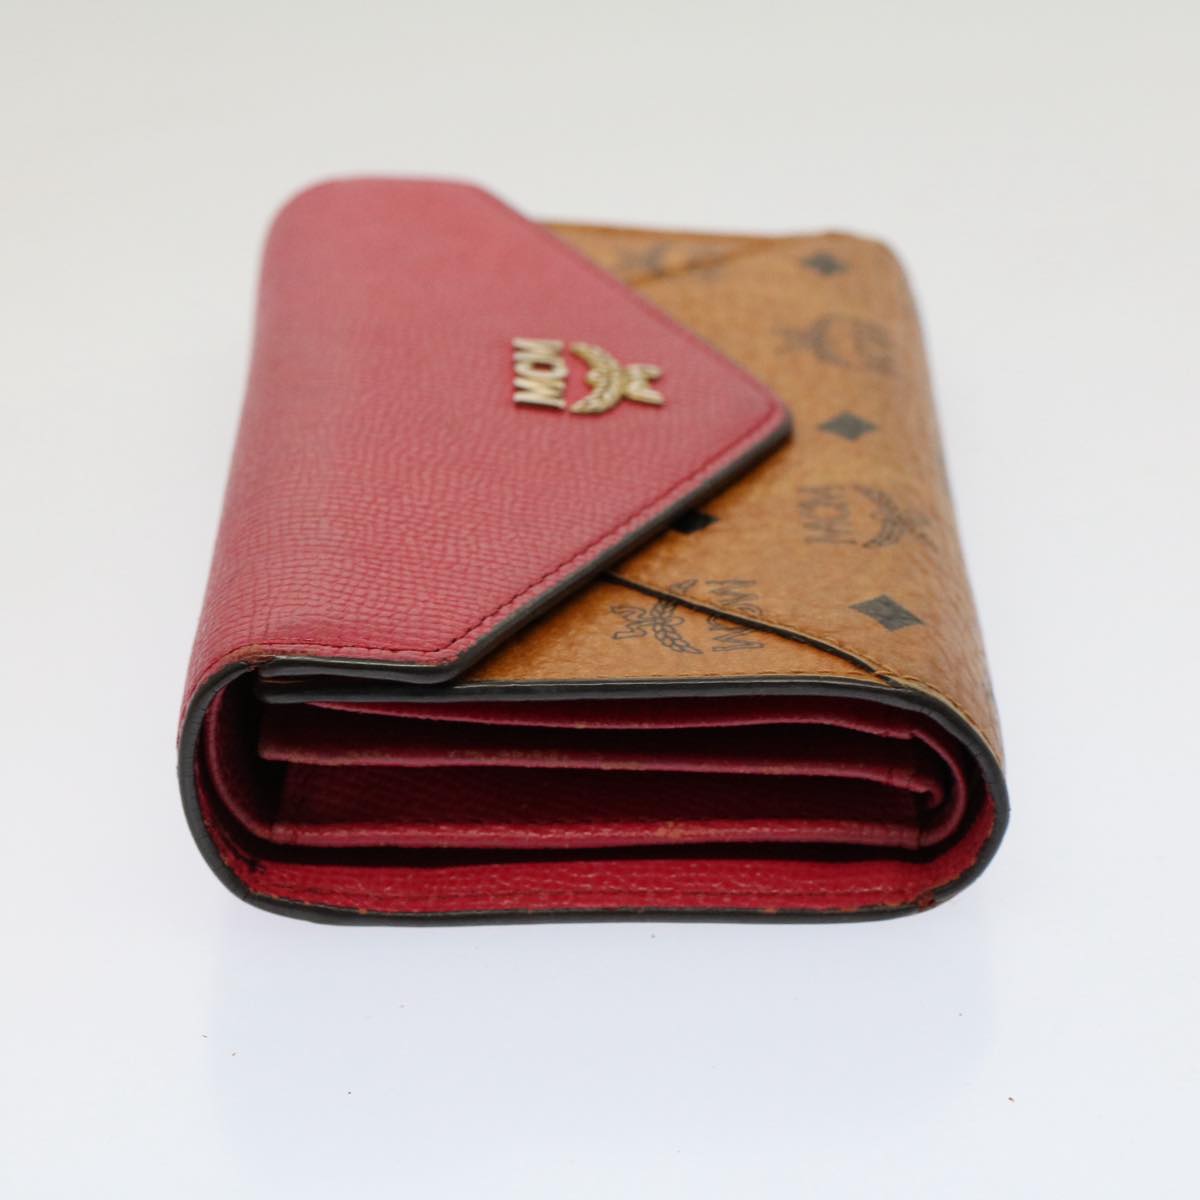 MCM Vicetos Logogram Wallet PVC Leather 3Set Brown Pink Auth ti1228